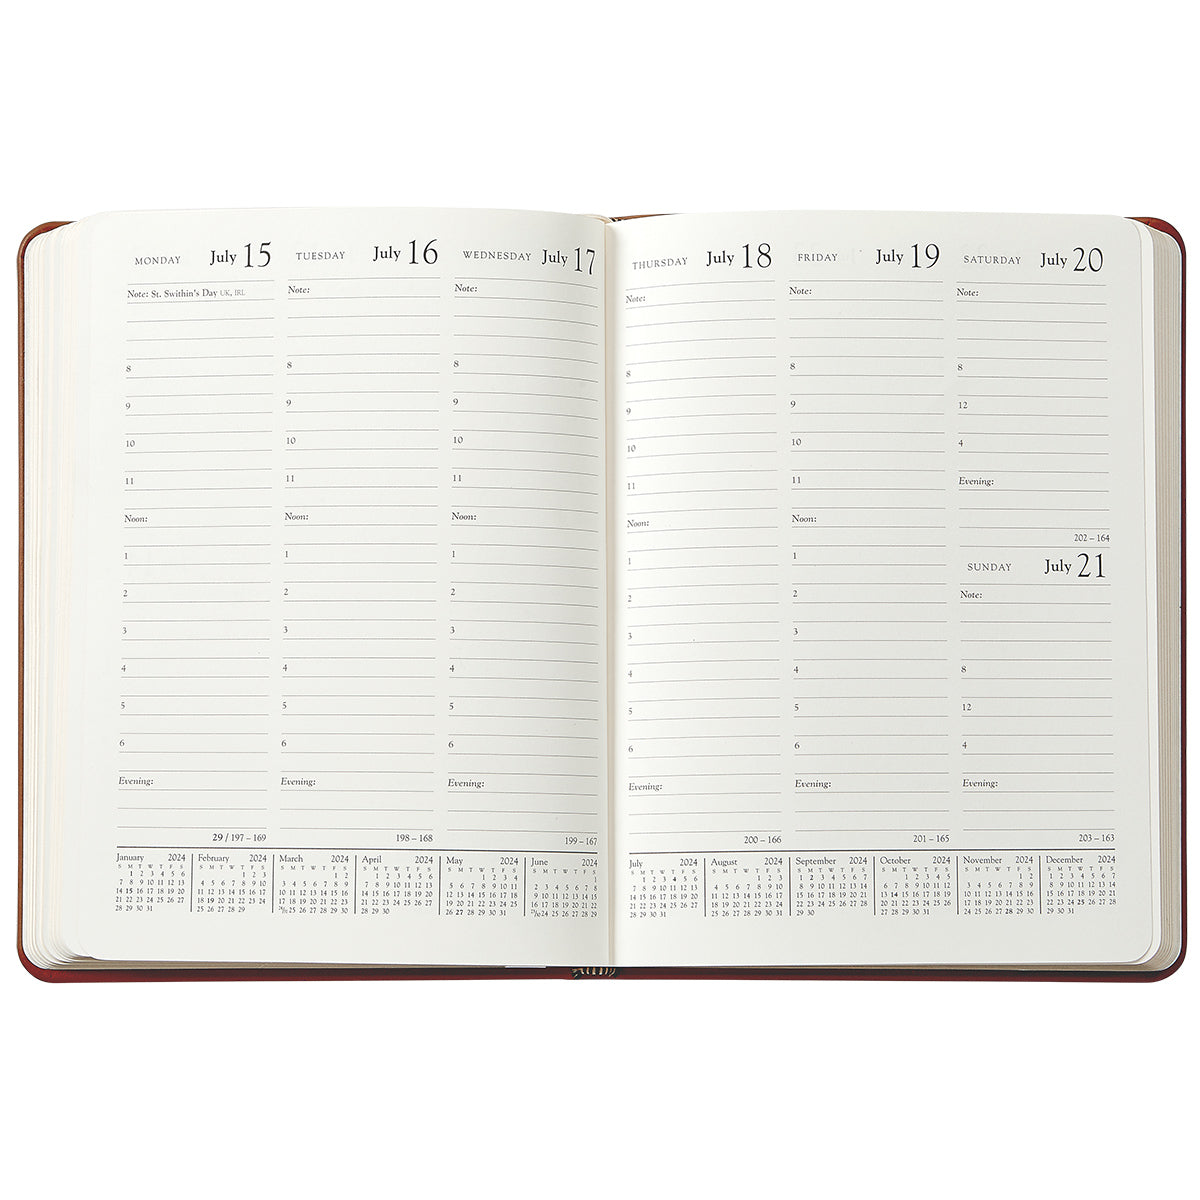 2024 Desk Diary in Goatskin Leather